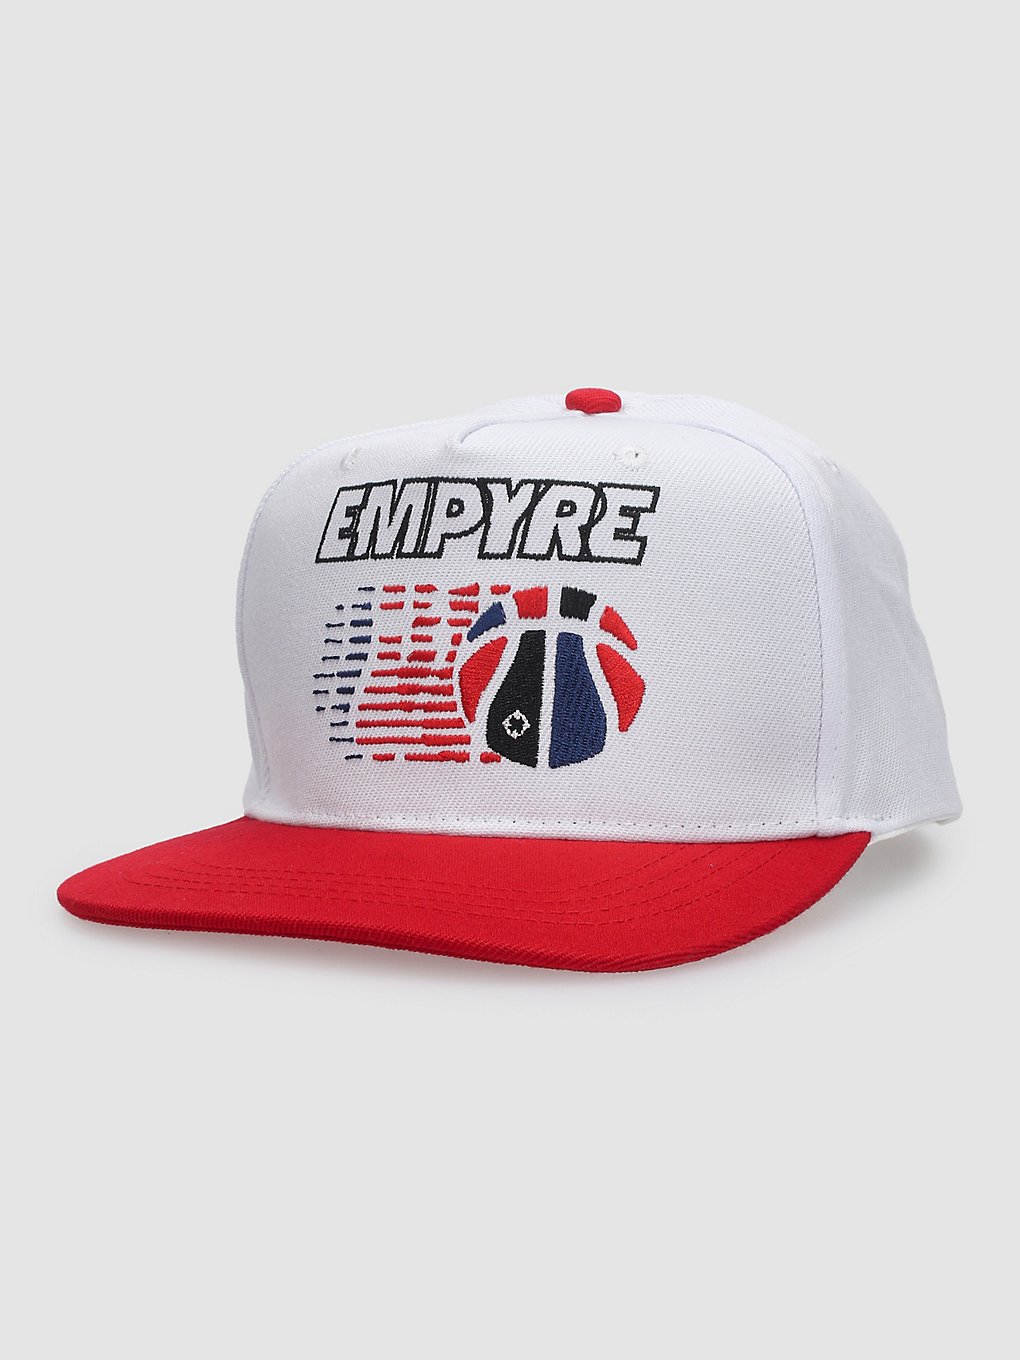 Empyre Bball Snapback Cap white kaufen